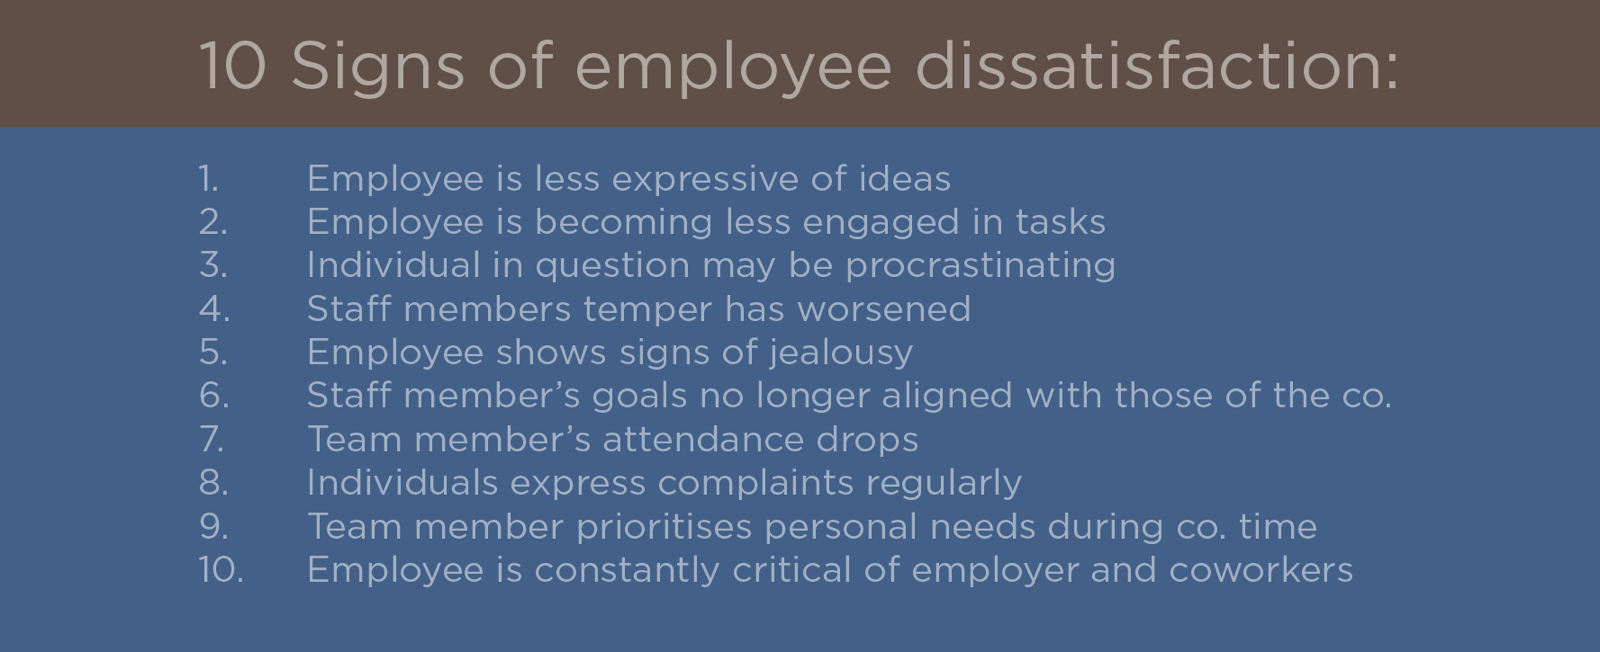 employee dissatisfaction maintain employee retention